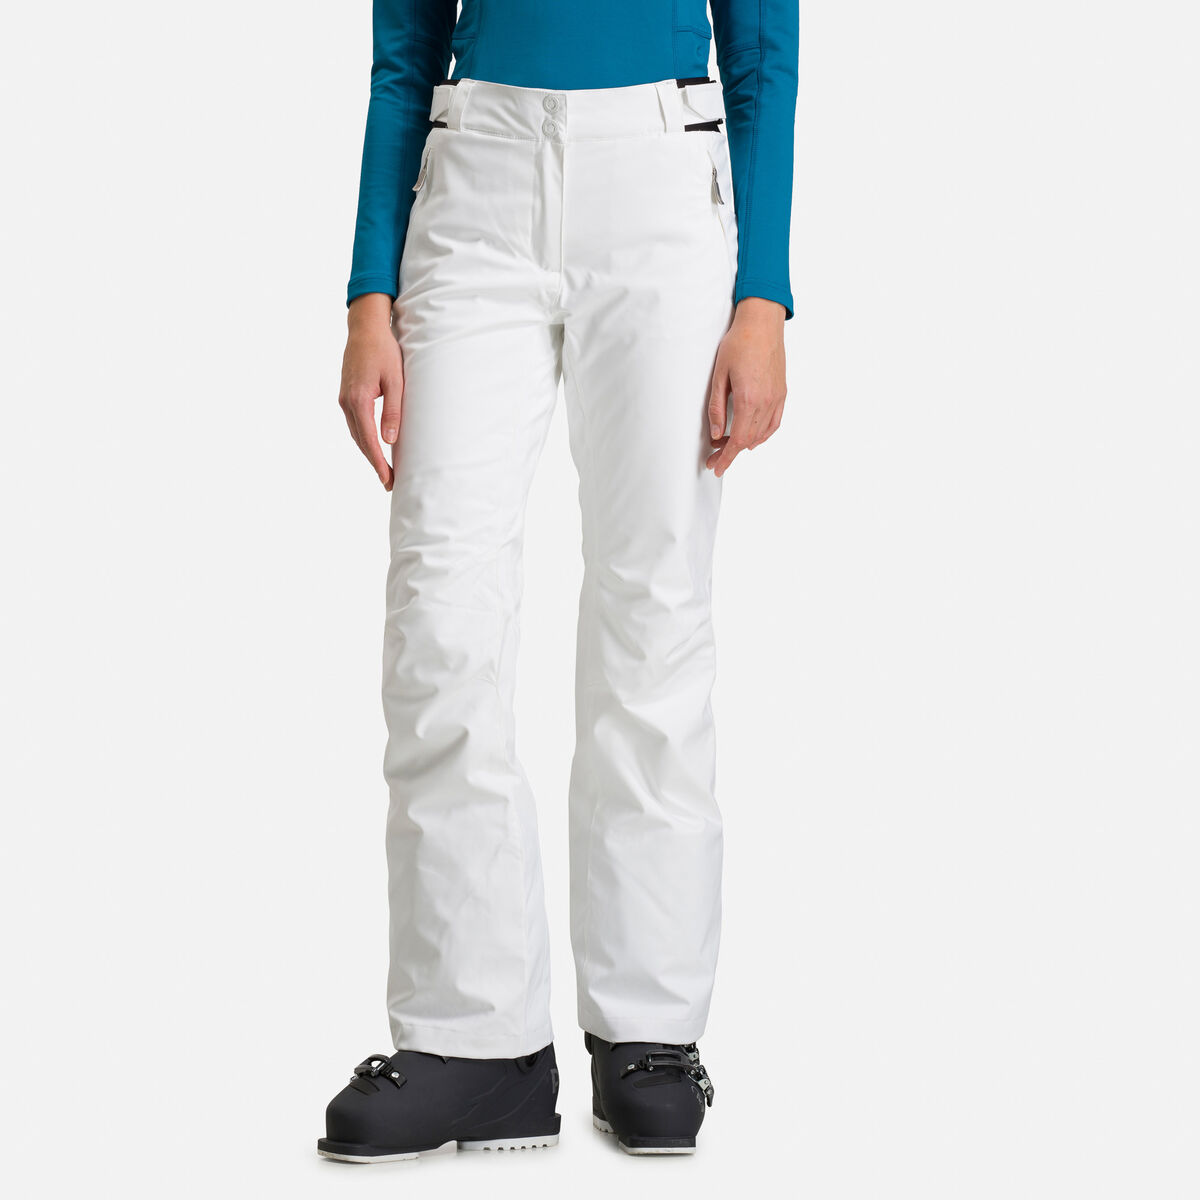 Rossignol Women's Ski Pants White